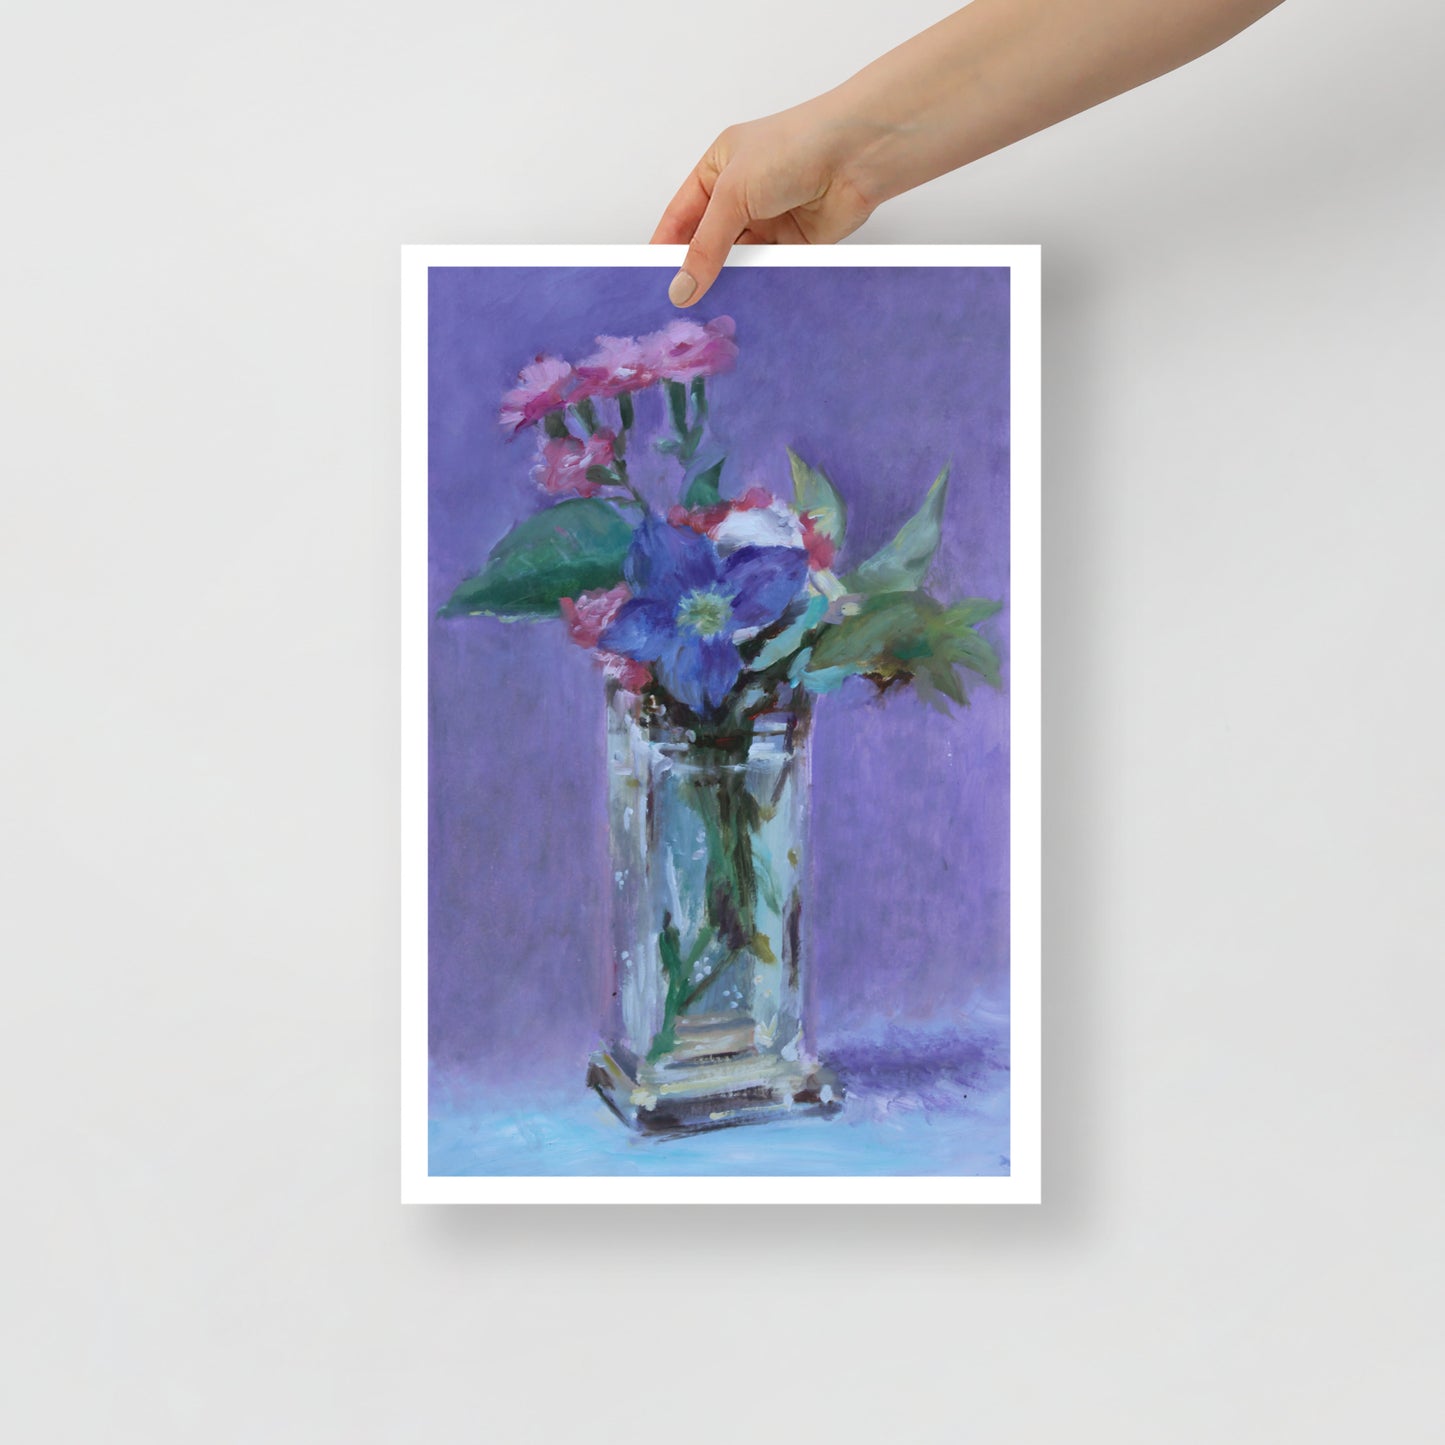 Premium Matte 12x18" Print - "Royal Amethyst Bloom"